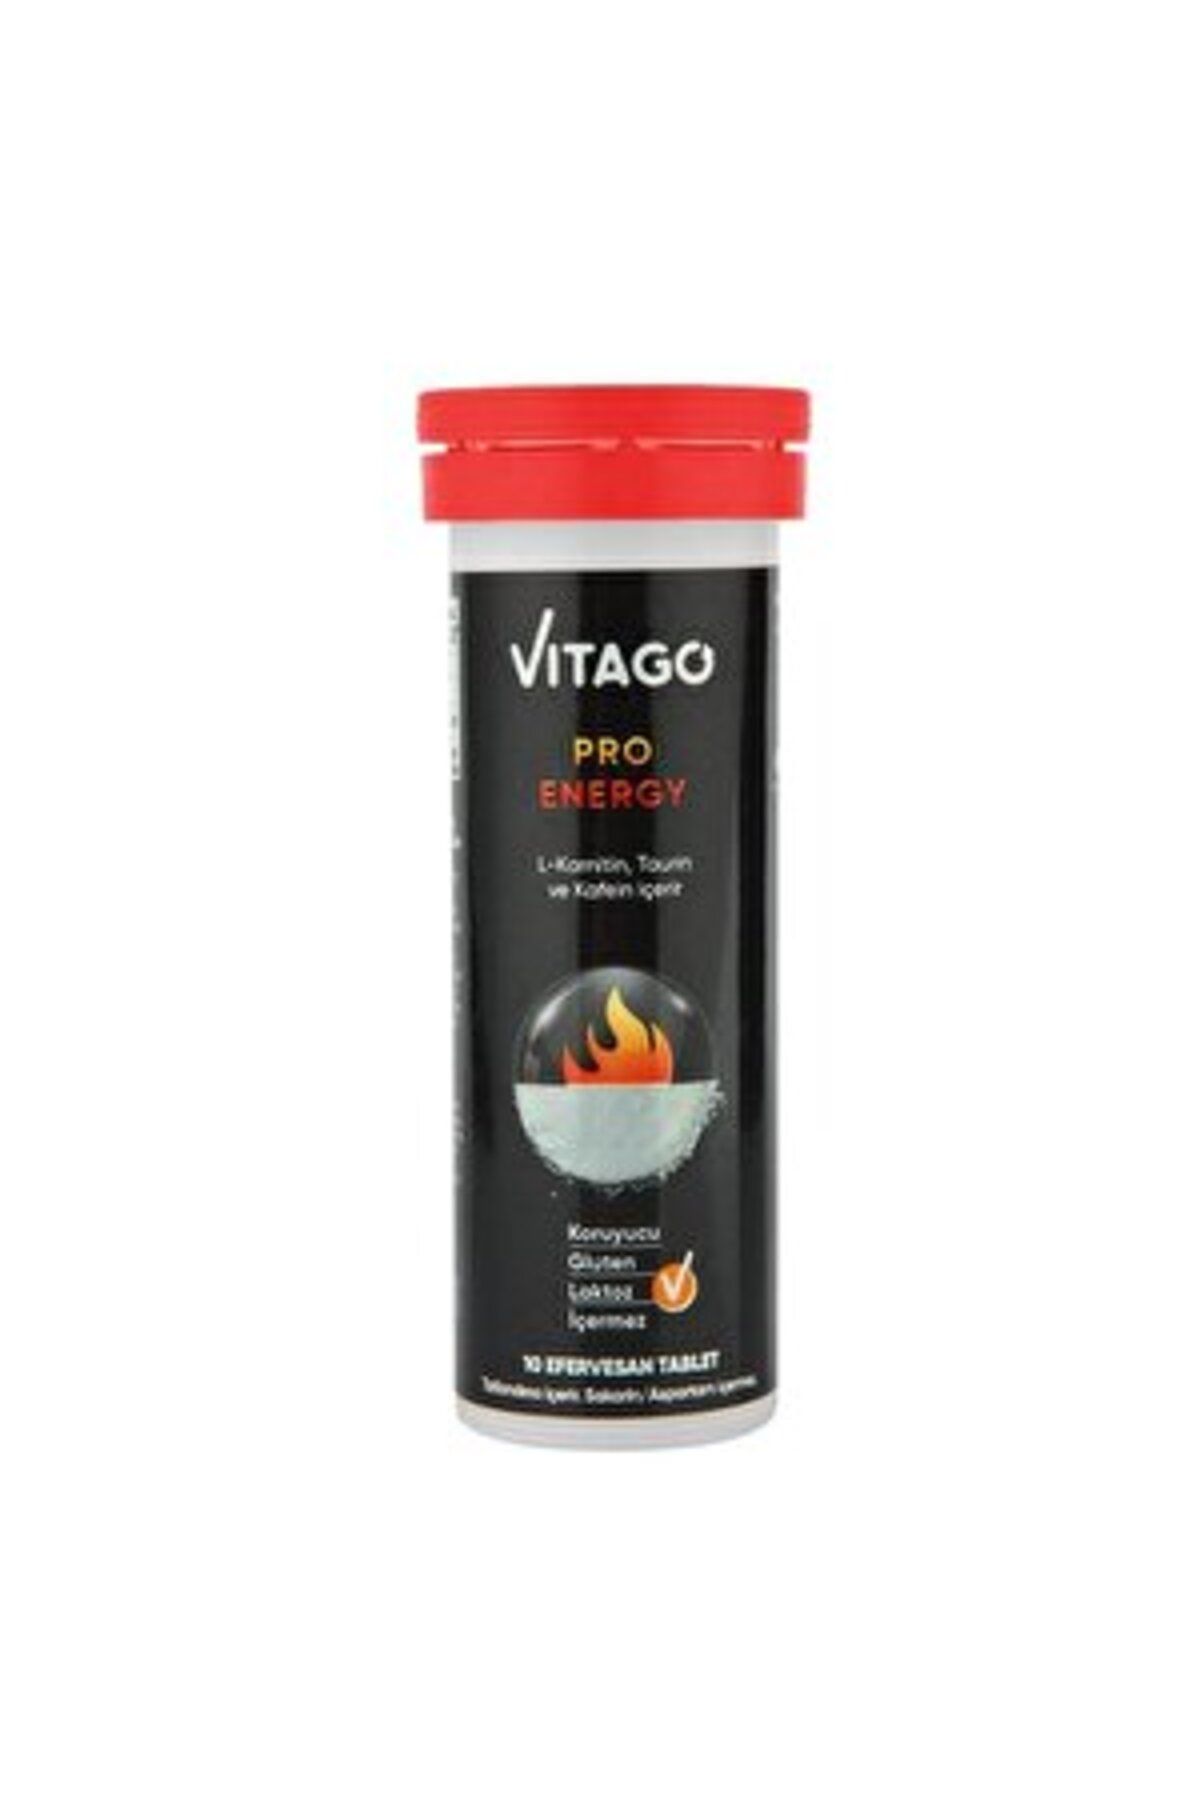 Vitago Energy L-Karnitin, Taurin, Kafein İçeren Efervesan Tablet 10'lu